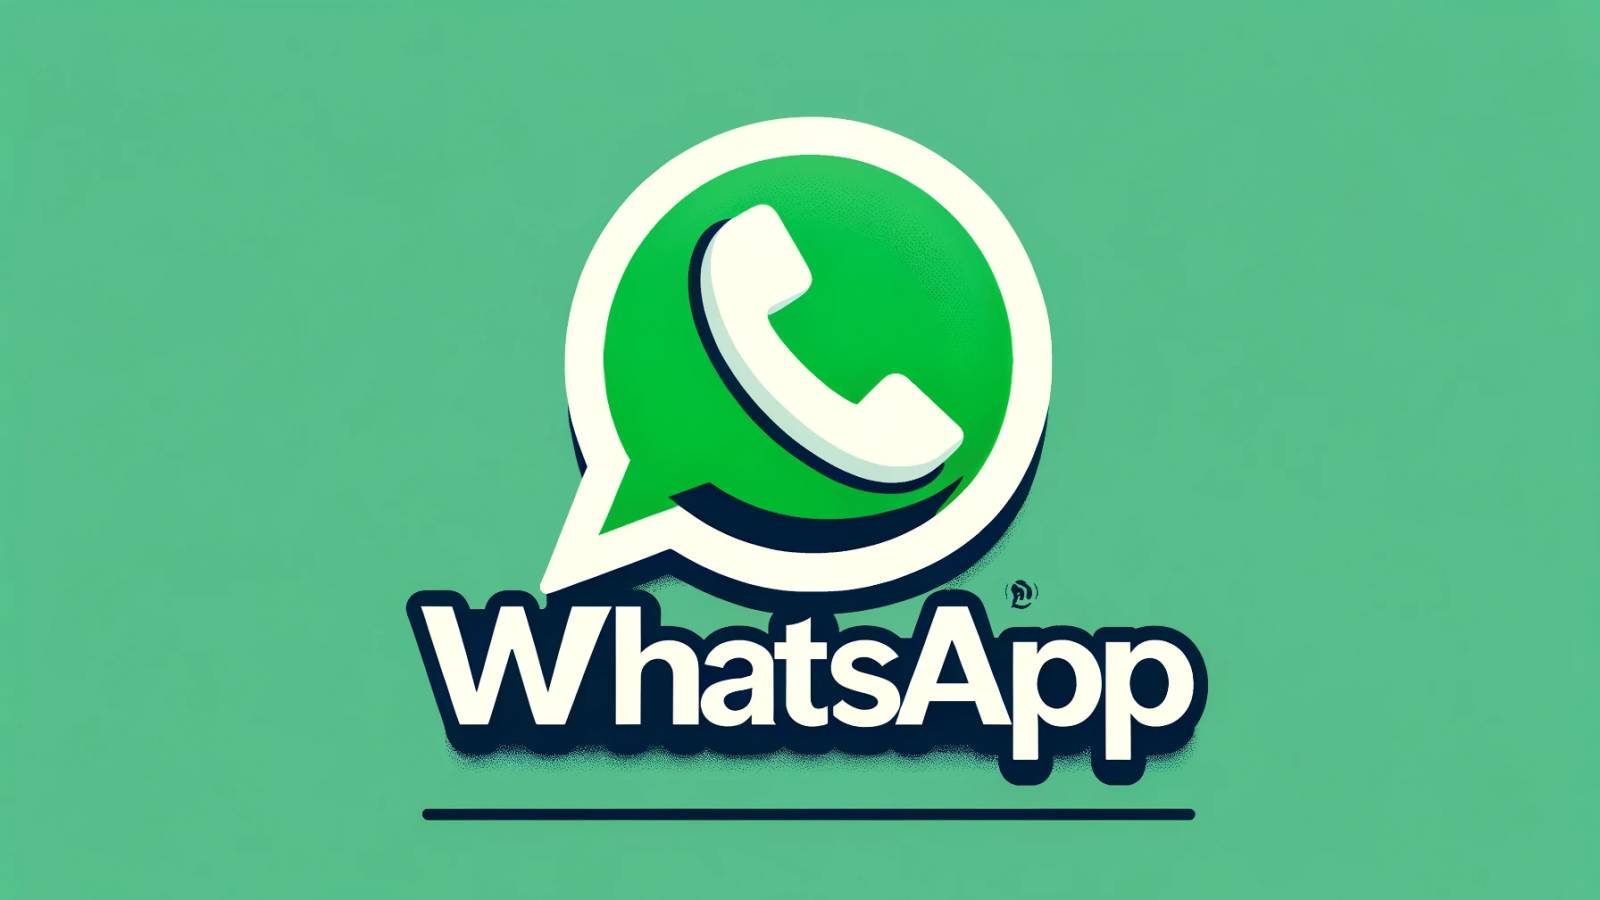 WhatsApp planering